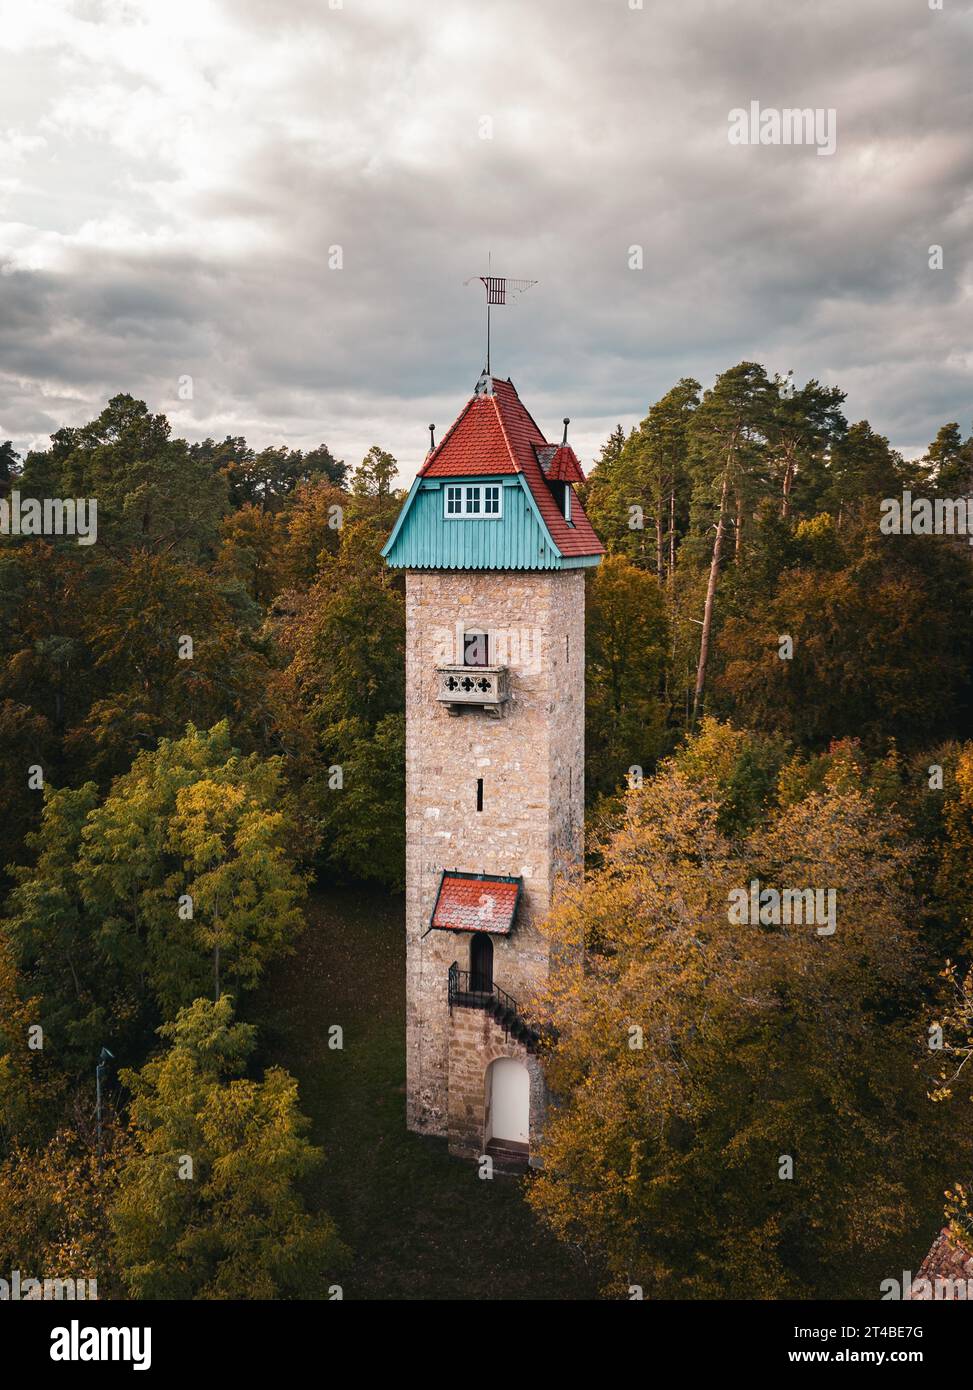 Historischer Turm im Herbstwald, Schuetteturm, Horb am Neckar, Deutschland Stockfoto